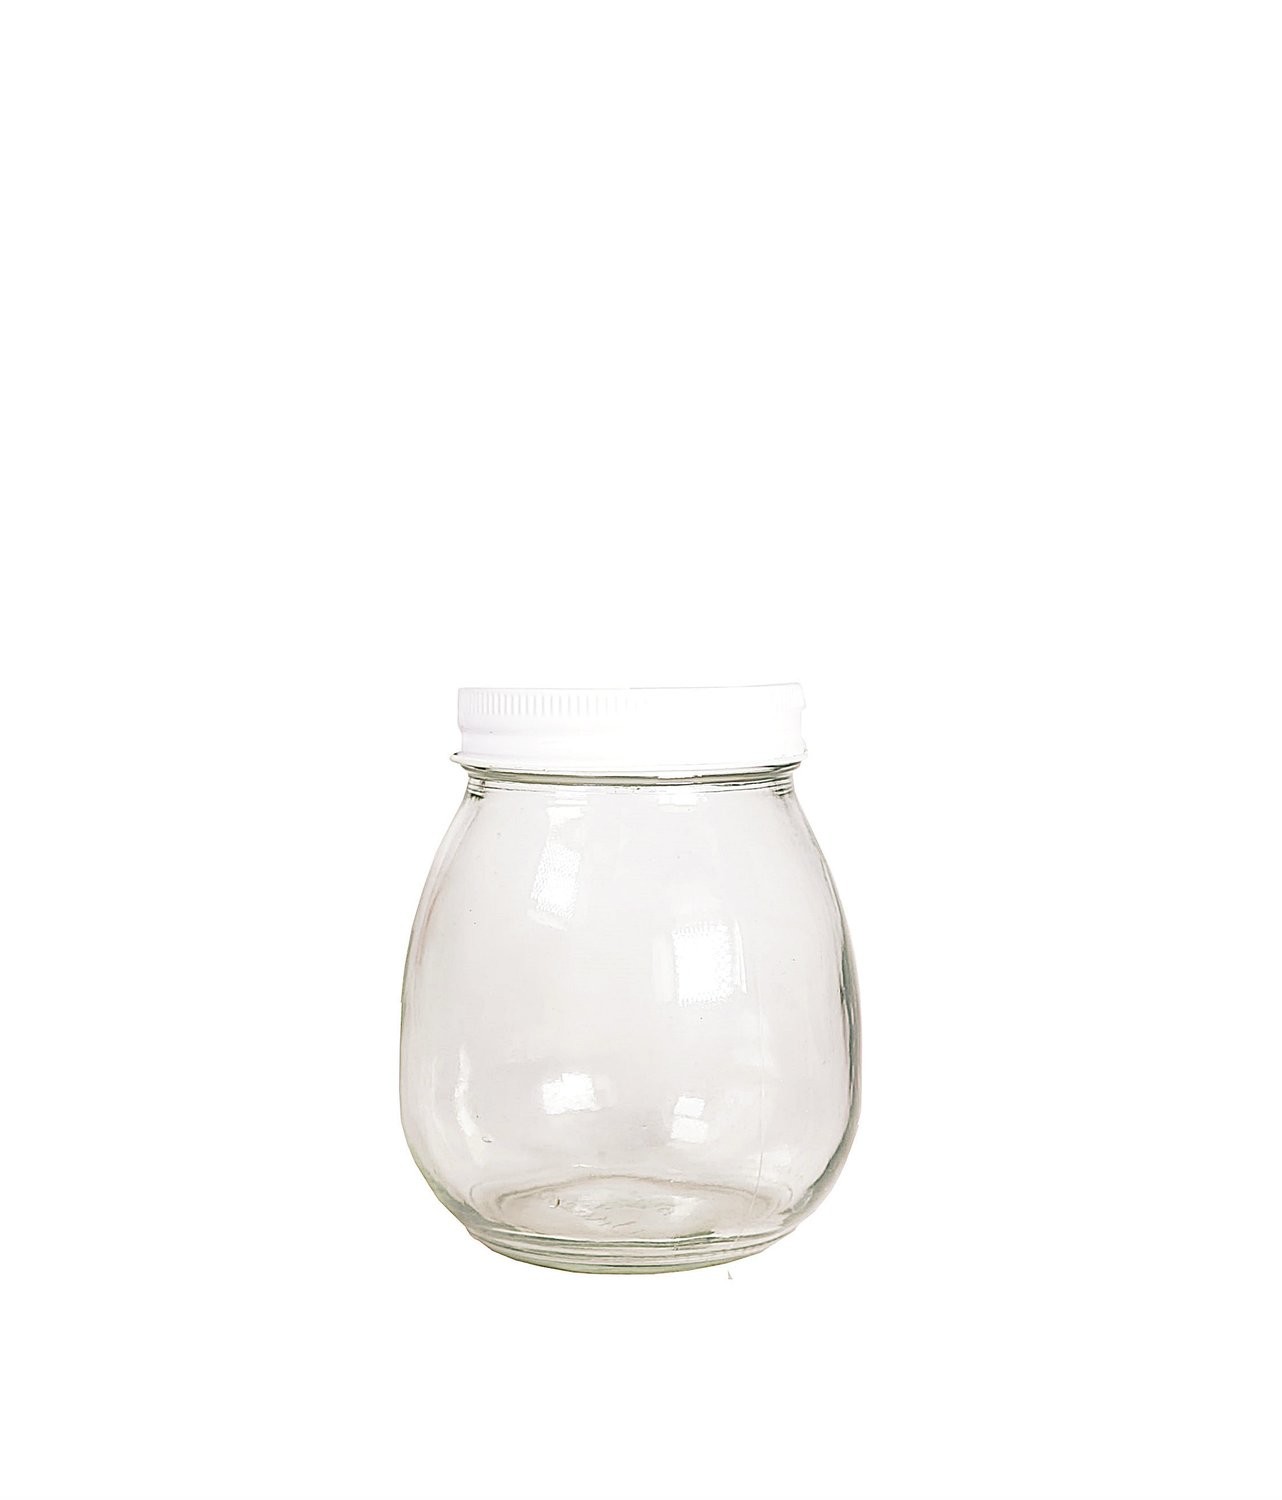 500ml, Mayo "Second Hand" Jar Glass Bottle w/ White Metal Cap